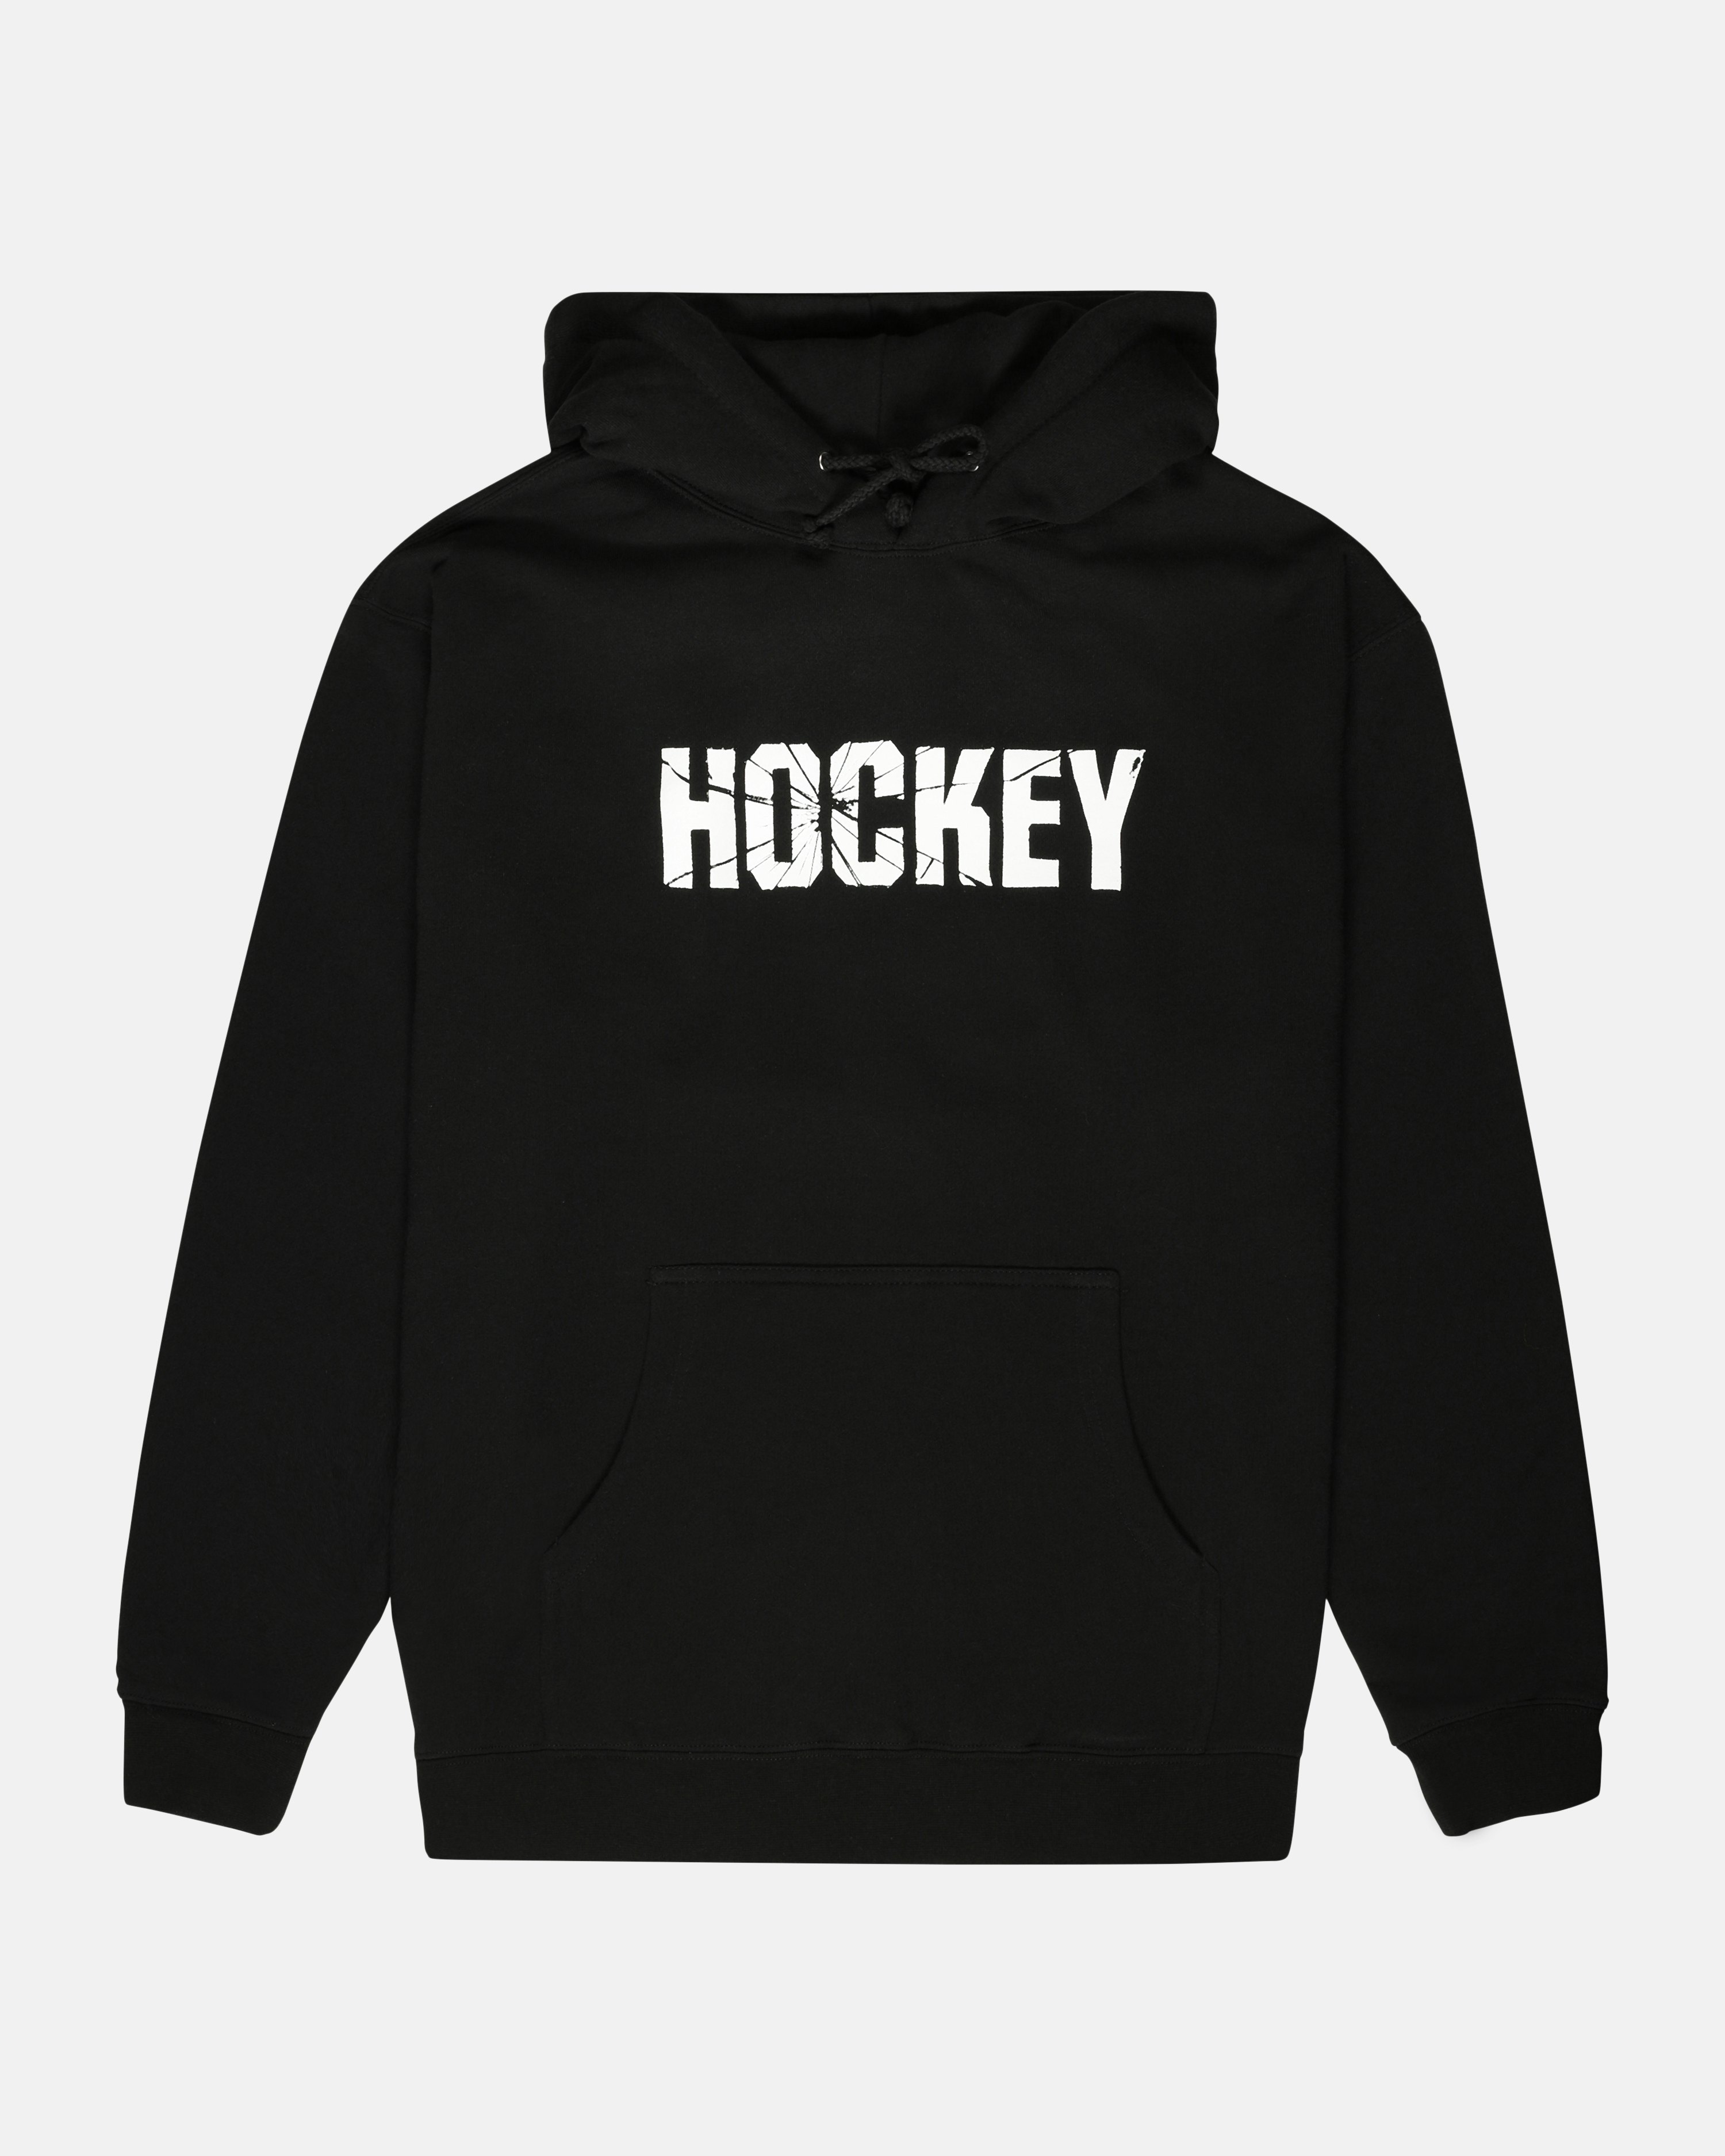 Hockey Hoodie - Human Cannonball Black | Men | Junkyard